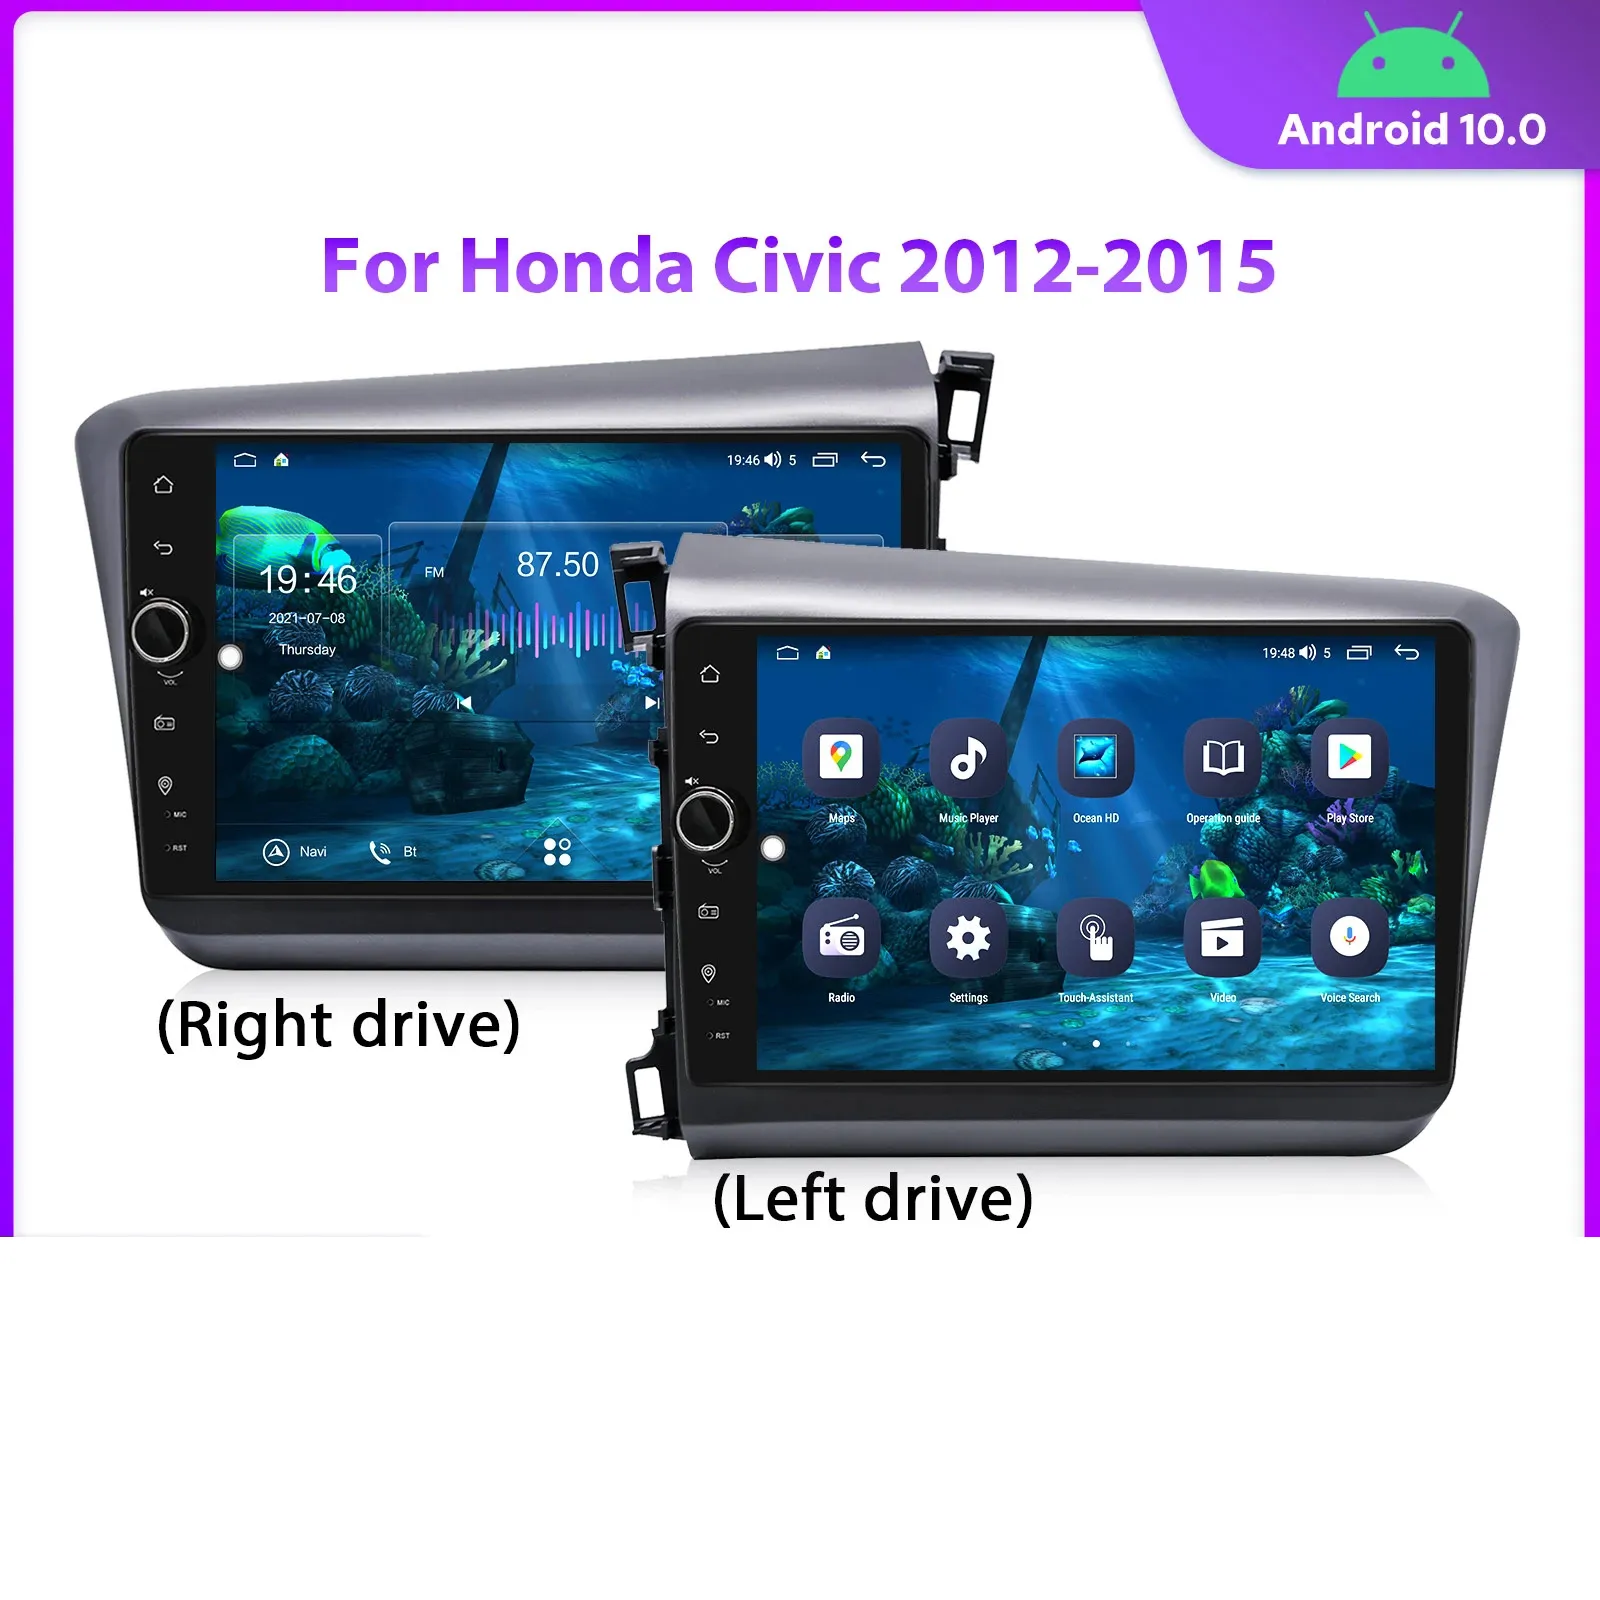 Honda Civic 2012-2015 용 Android 10 자동차 탐색 비디오 GPS 오디오 라디오 멀티미디어 스테레오 플레이어